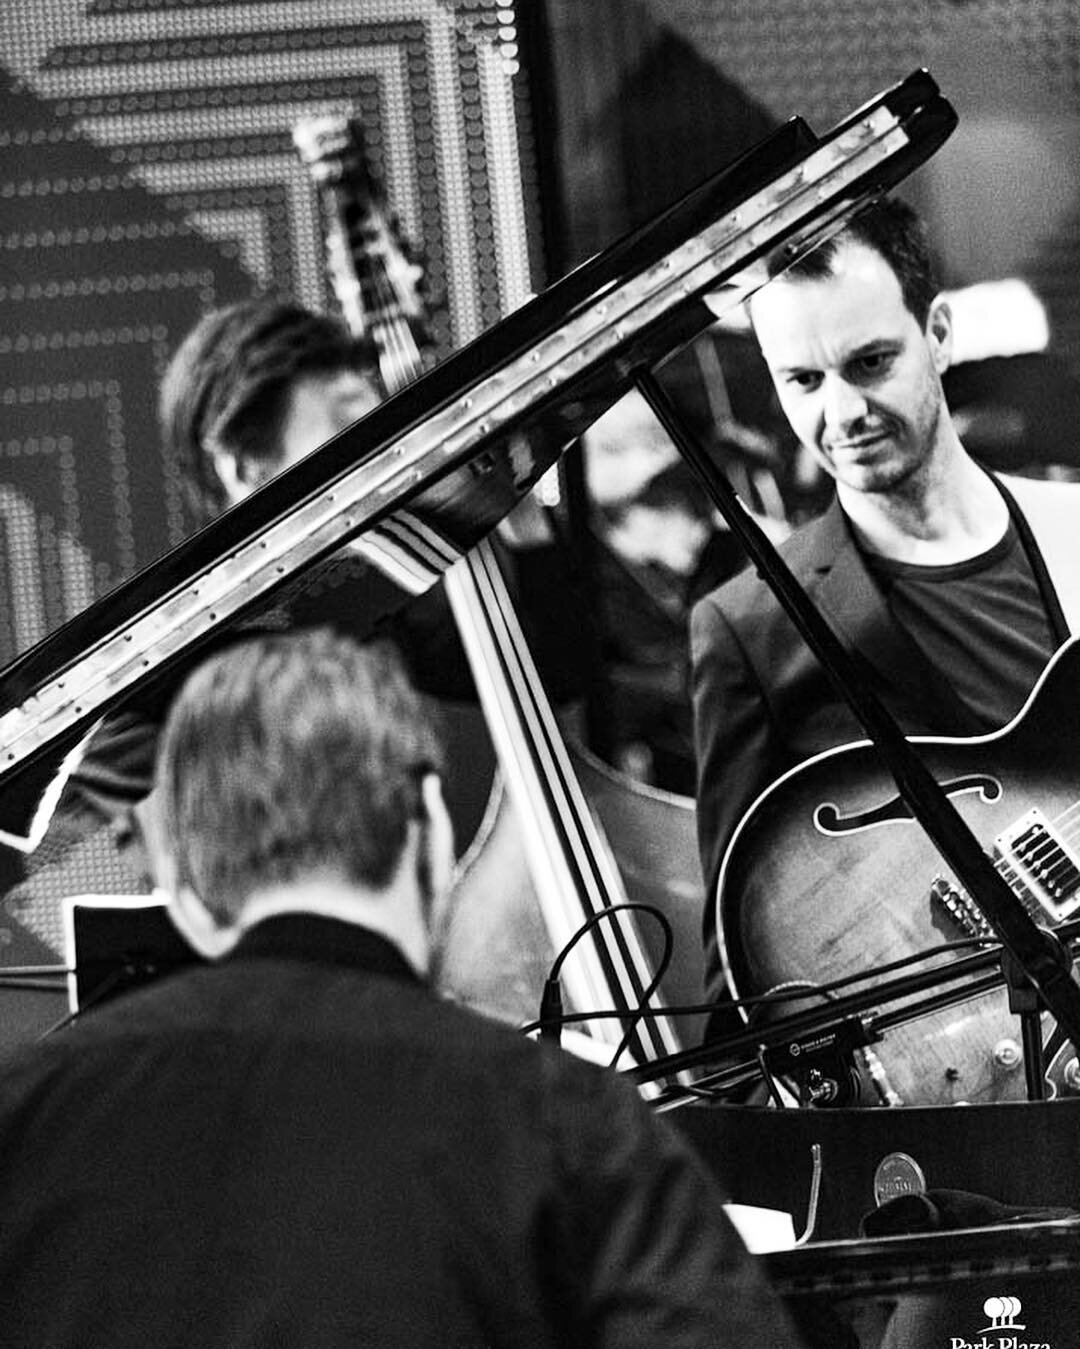 About last sunday&rsquo;s @redlightjazz Festival! Jasper Blom quartet introducing Pablo Held at Jazz at the Vic. 📸 by @vgilst ⠀⠀⠀⠀⠀⠀⠀⠀⠀
⠀⠀⠀⠀⠀⠀⠀⠀⠀
#jazz #jazzpiano #jazzfestival #redlightjazz #redlightjazzfestival #amsterdam #pabloheld @pabloheldmusi